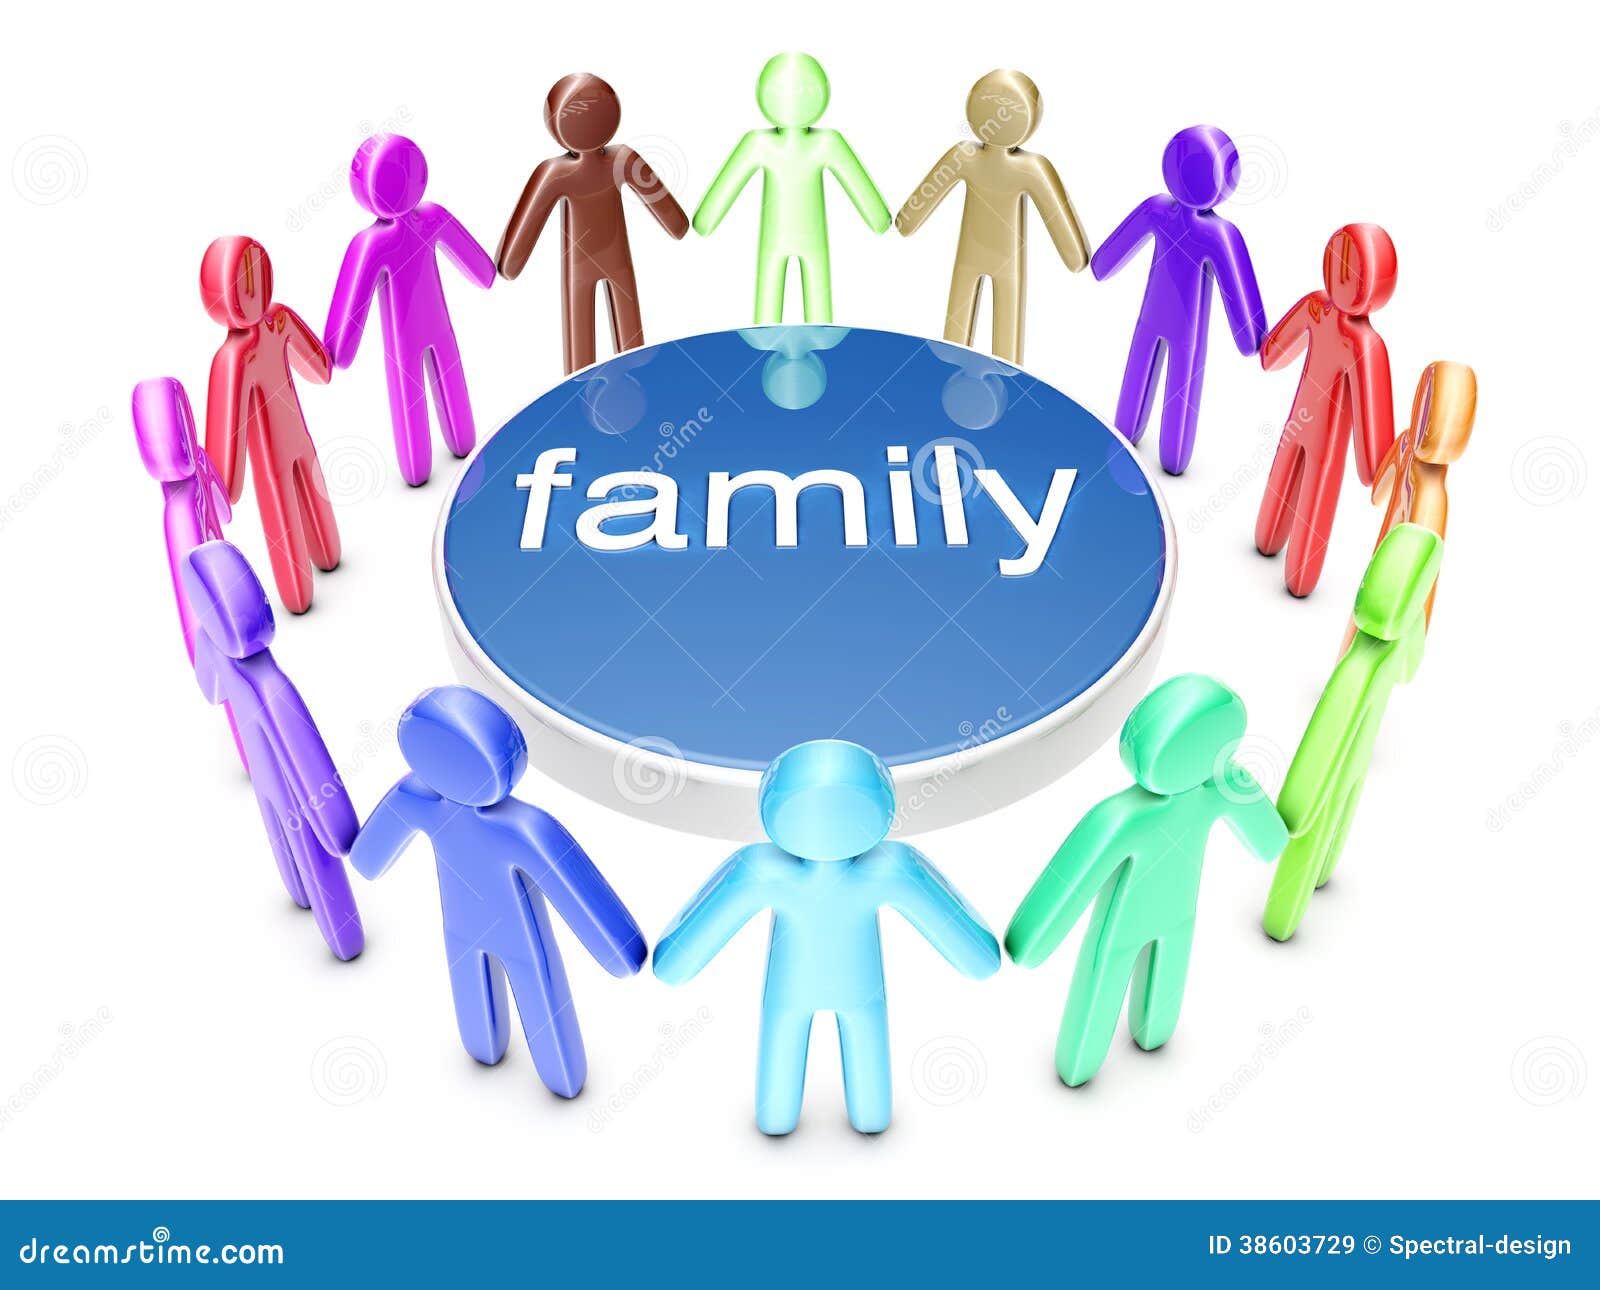 Family stock illustration. Illustration of graphic, staff - 38603729